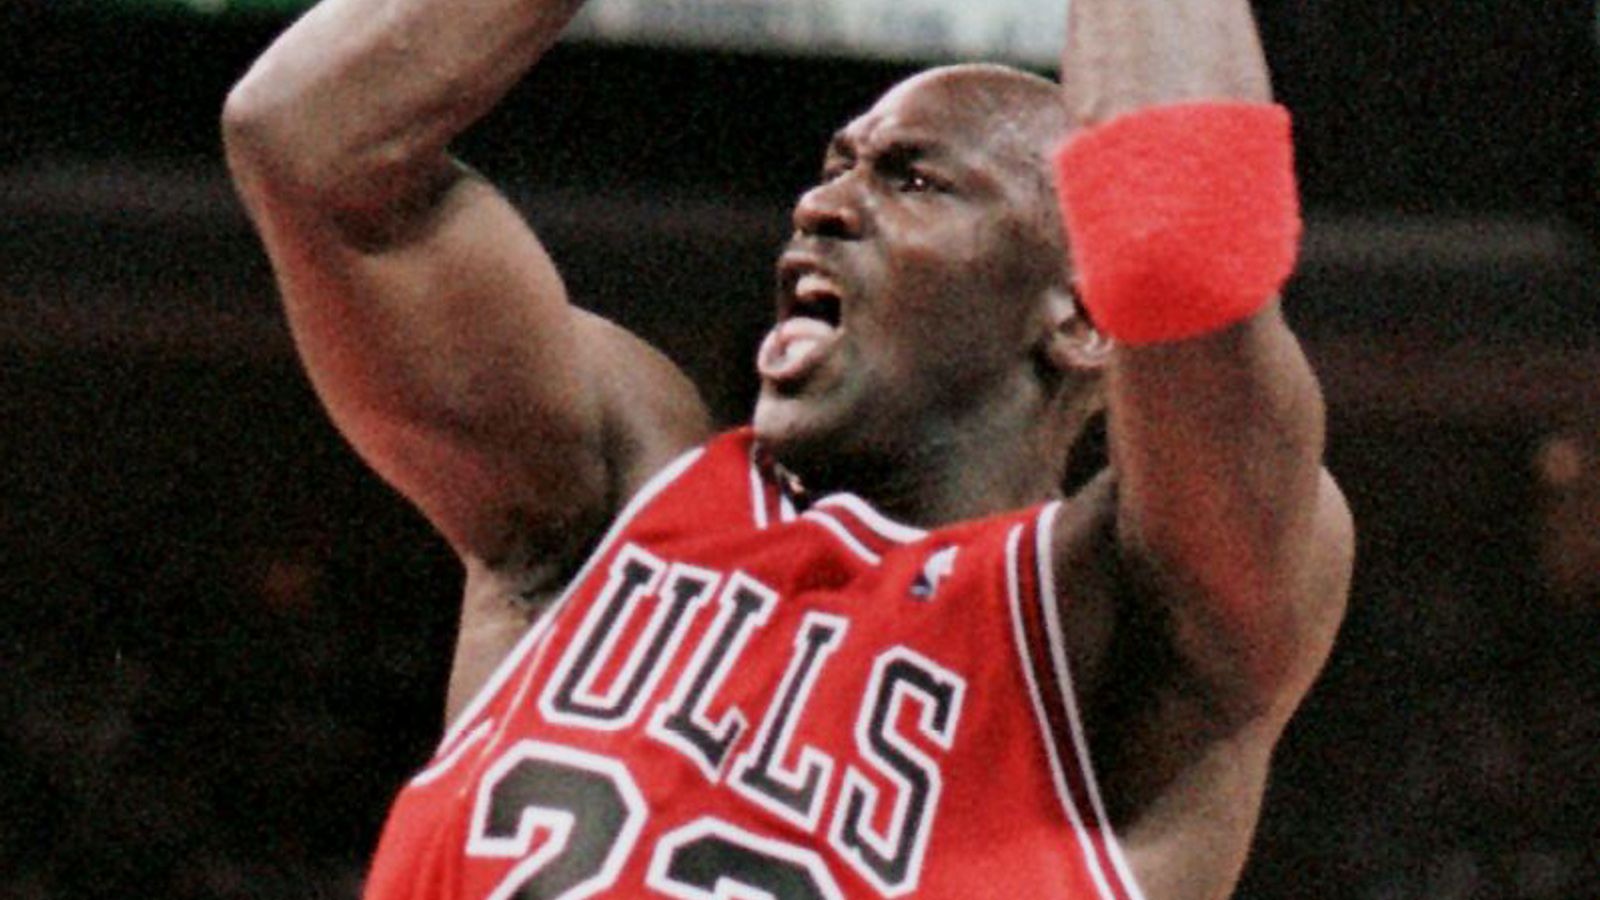 Michael Jordan's iconic turnaround fadeaway jump shot - how'd he do that? | NBA News | Sky Sports